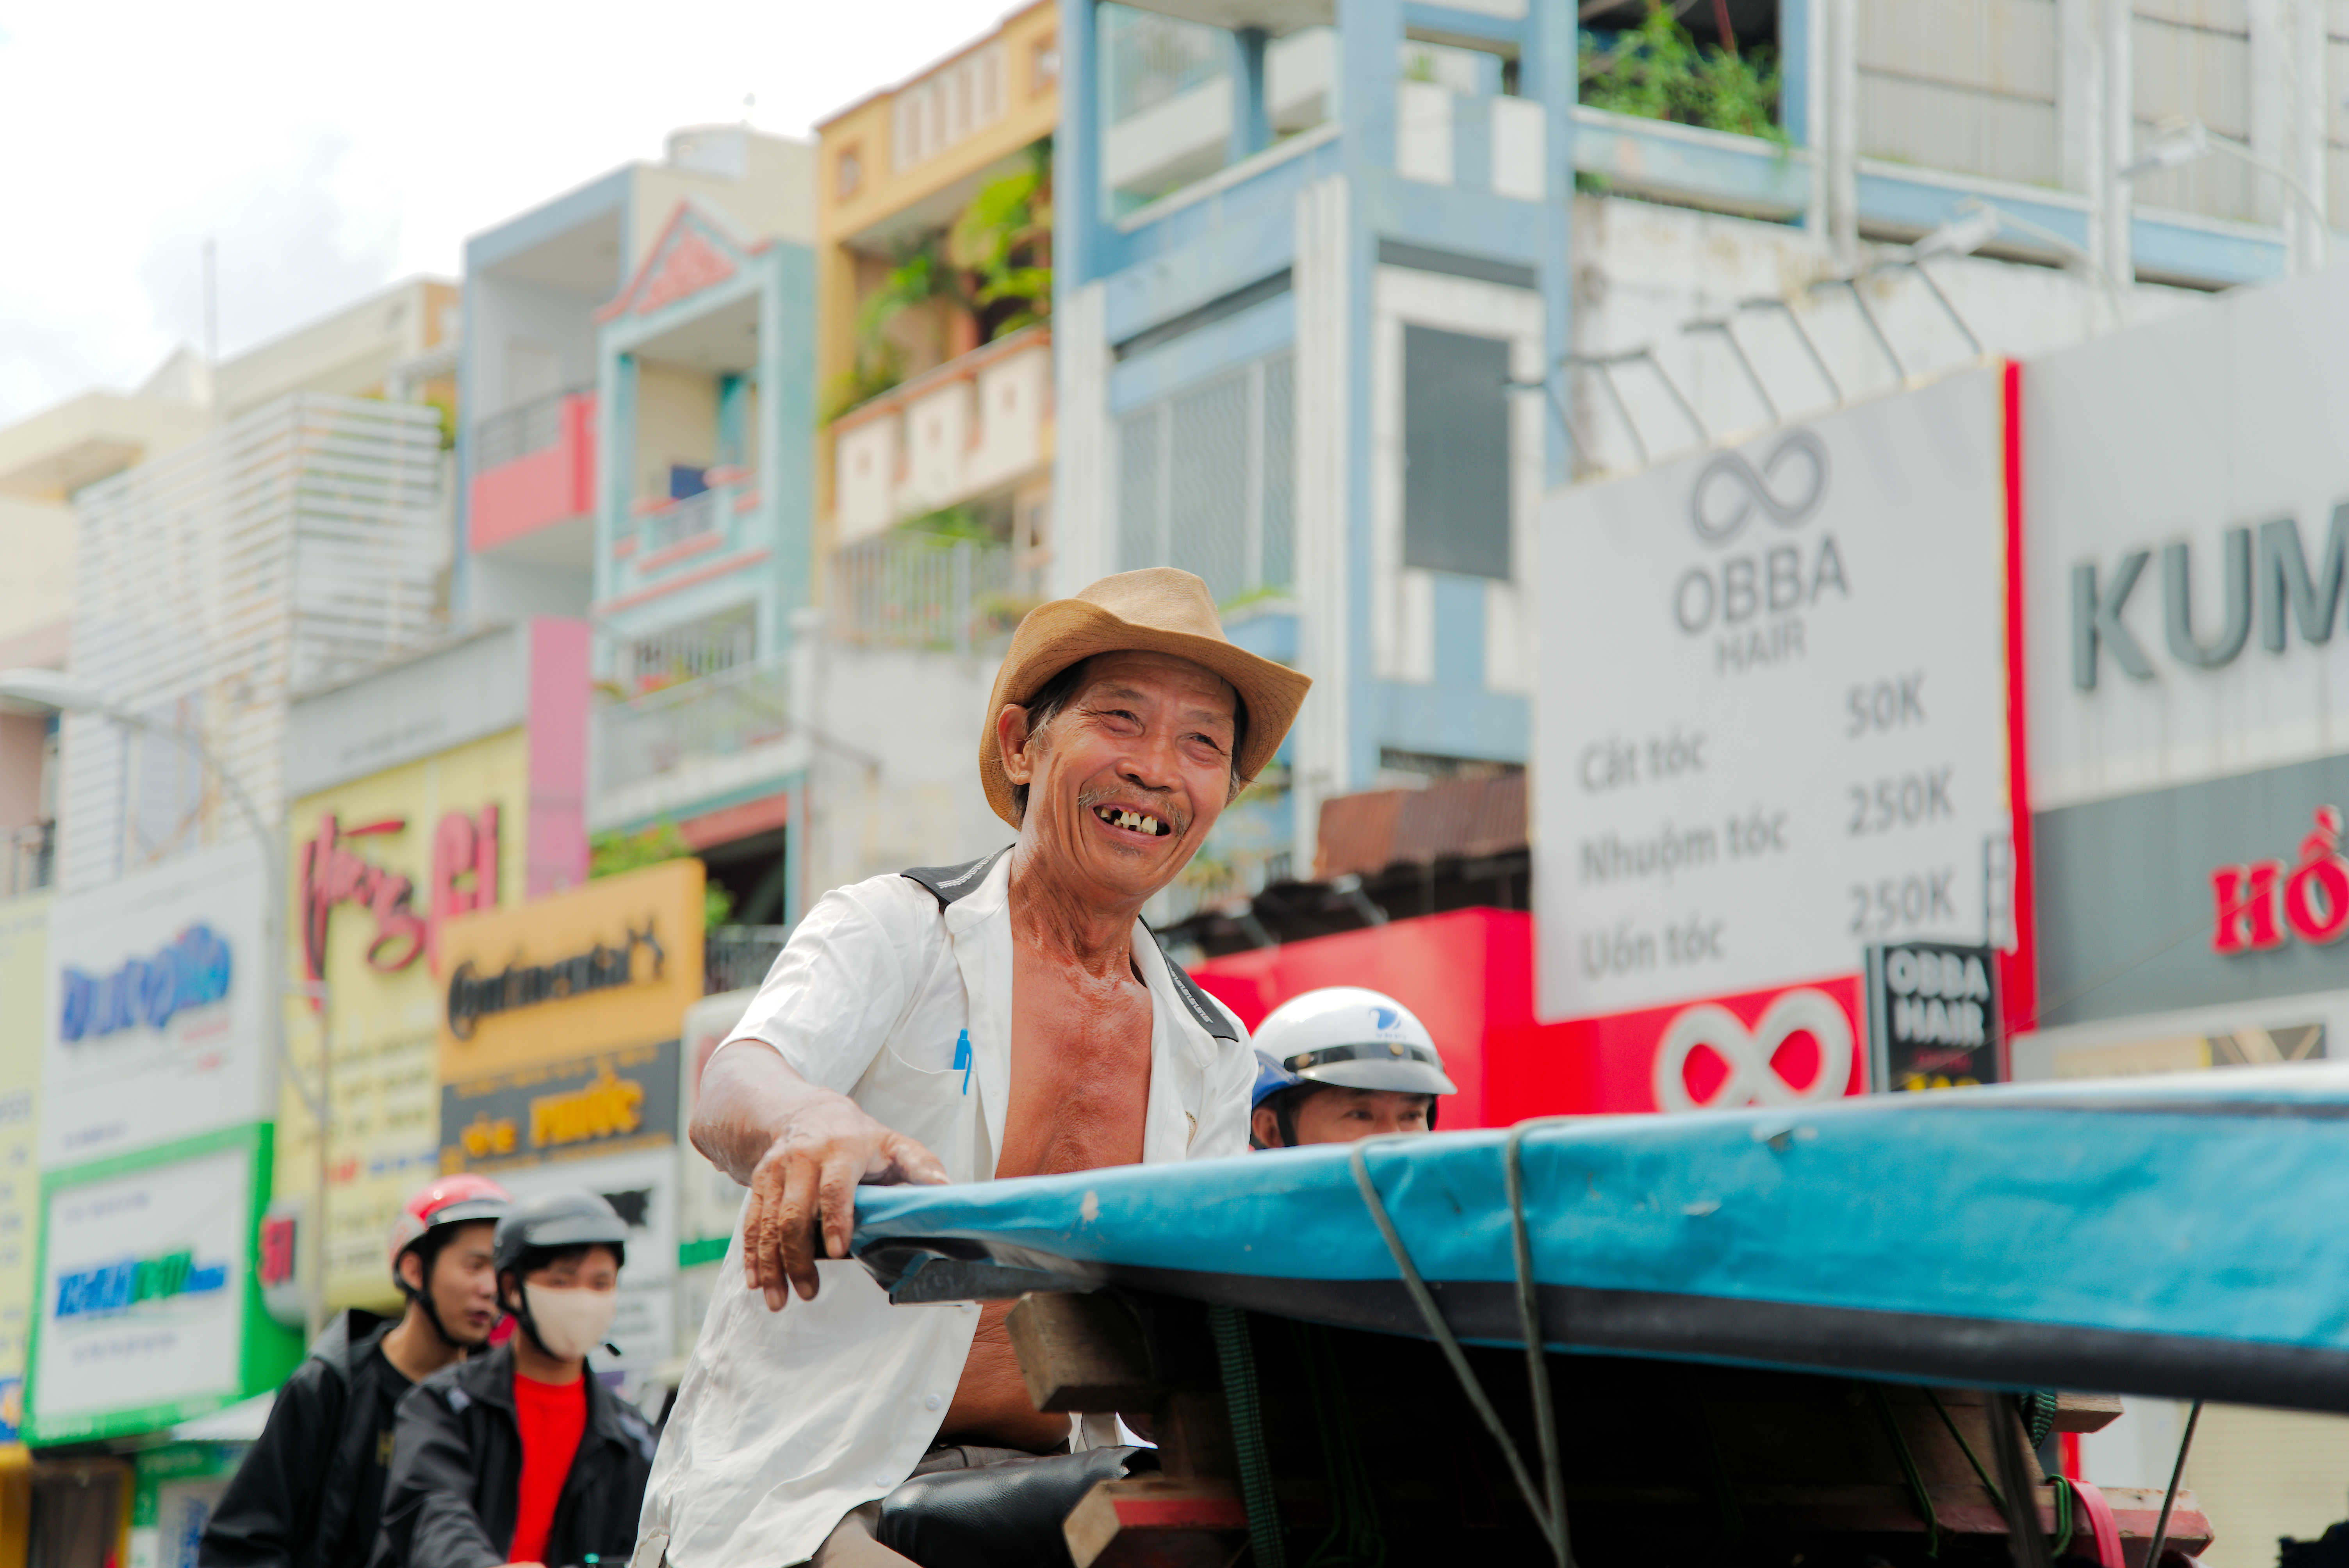 A cyclo driver on Vietnam street through Nunas' lens